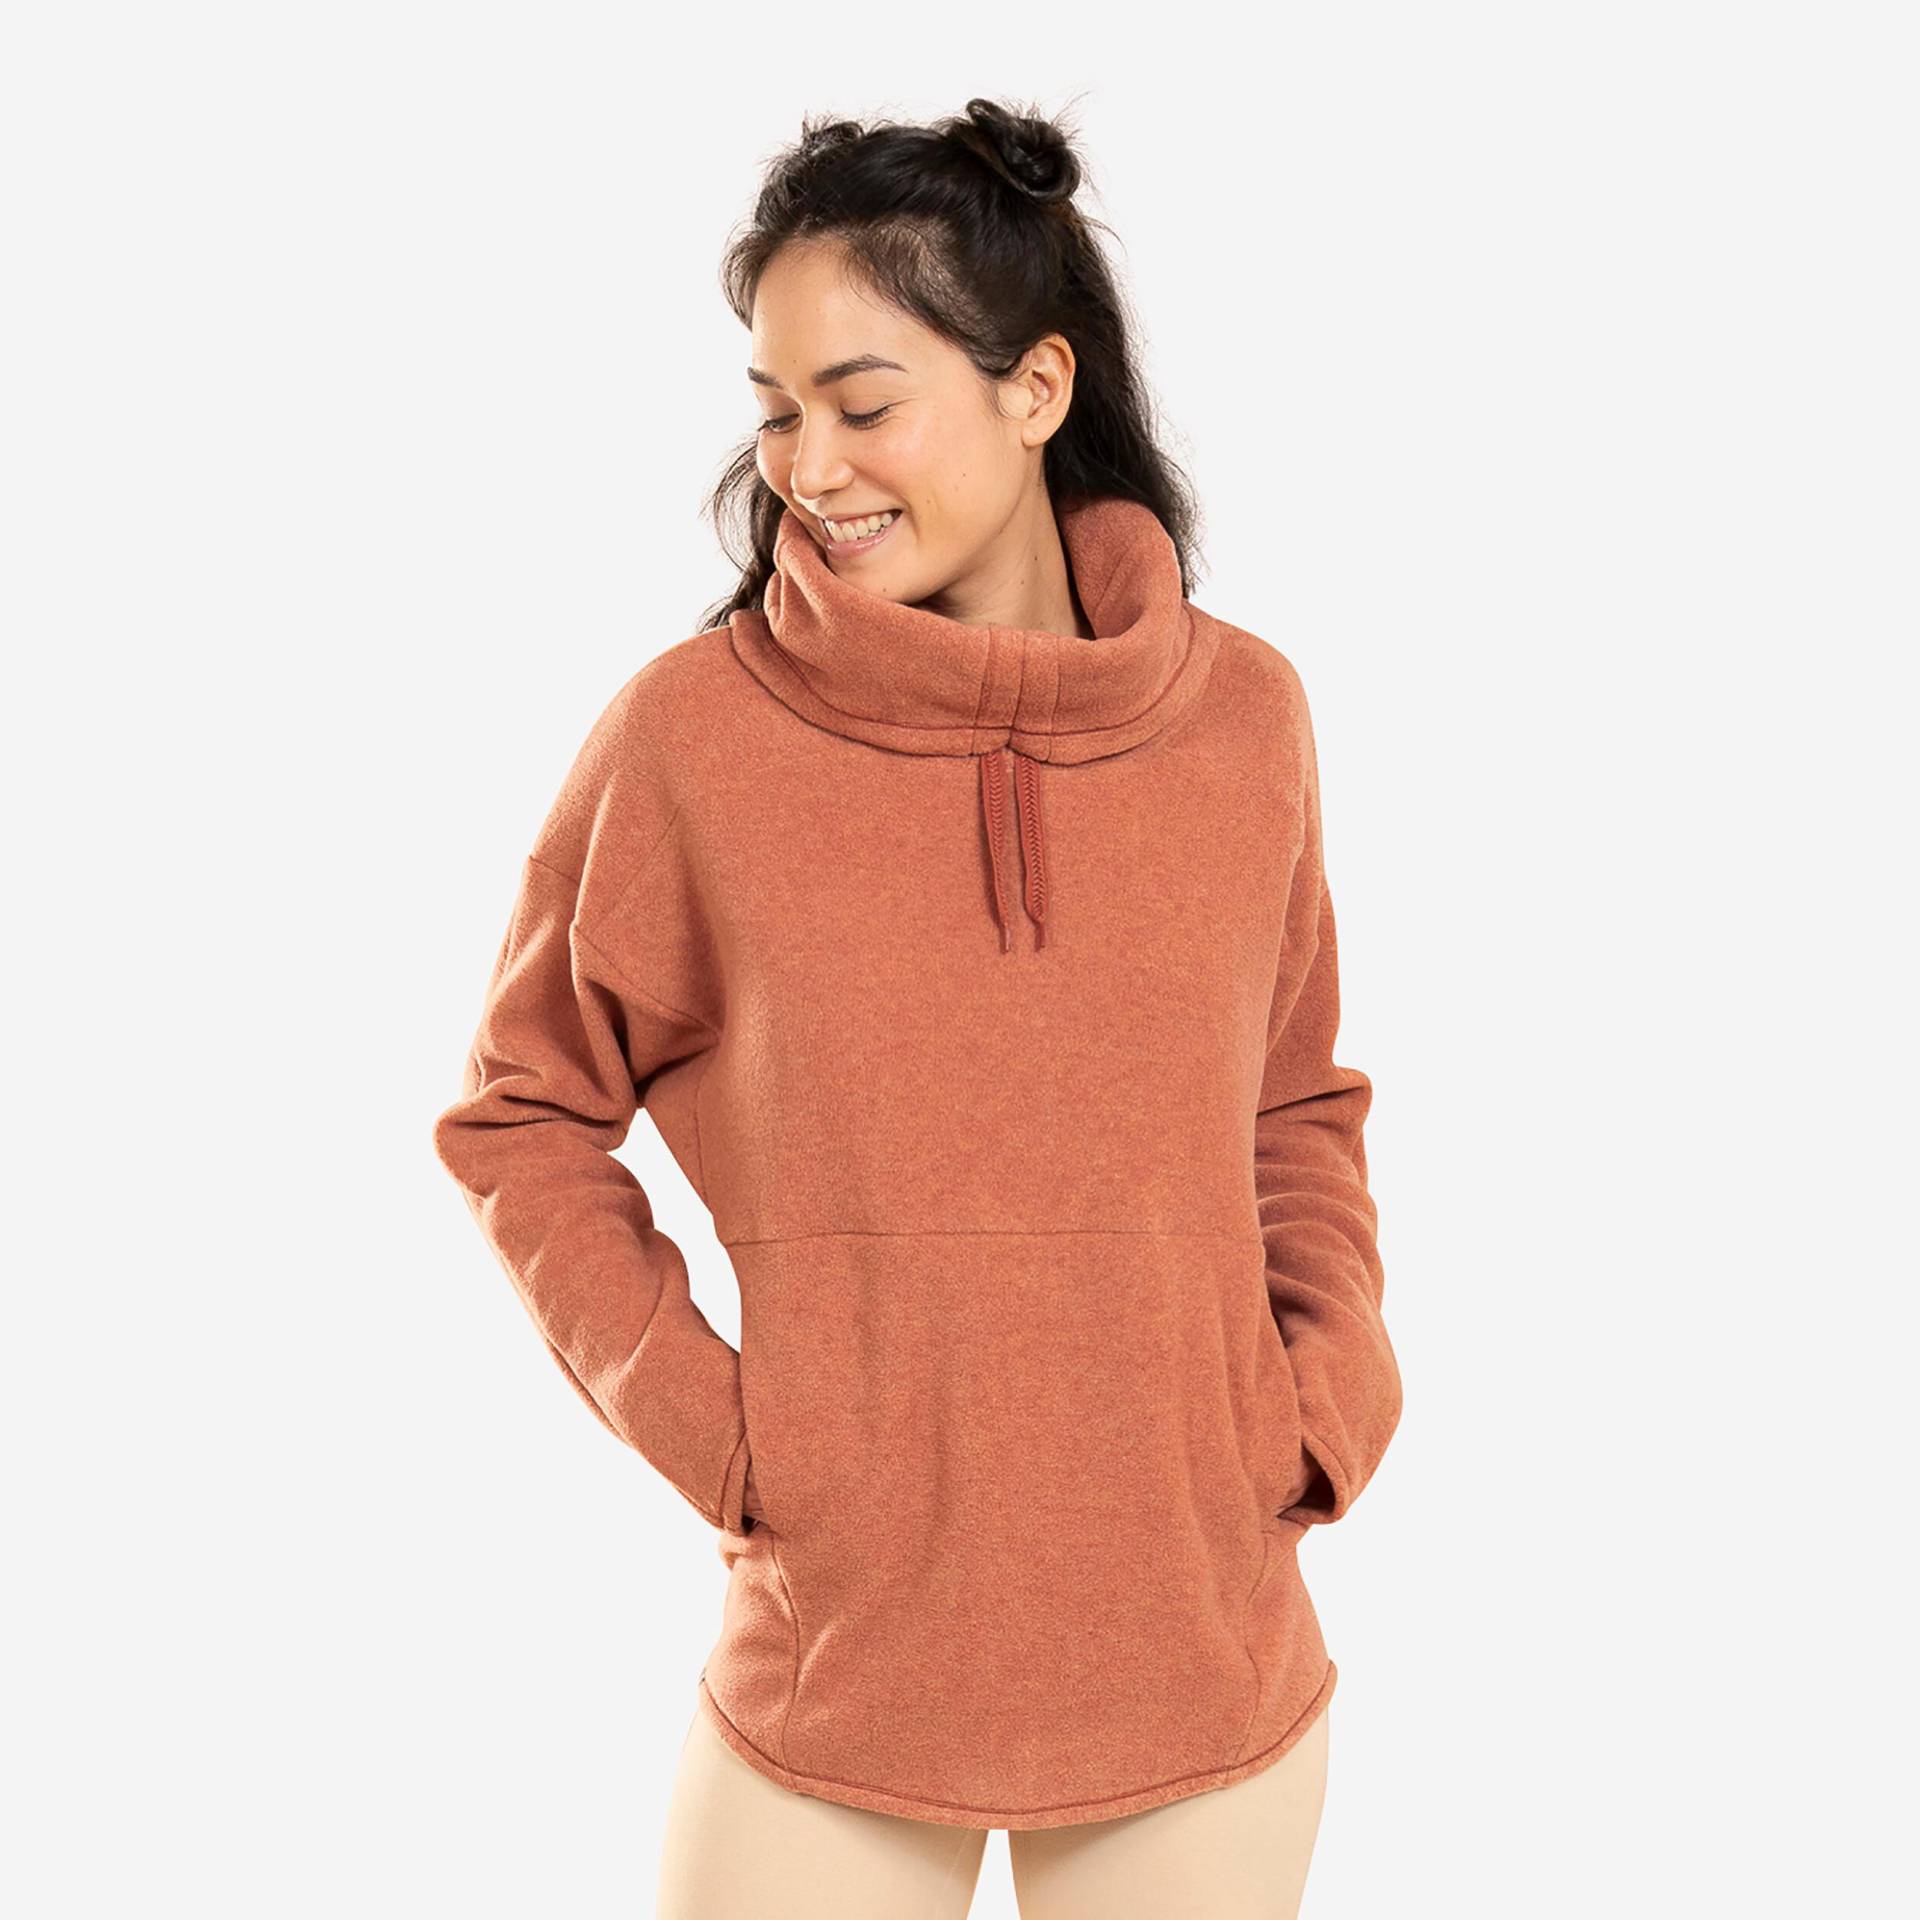 Sweatshirt Yoga Entspannung Fleece Damen Braun L von KIMJALY